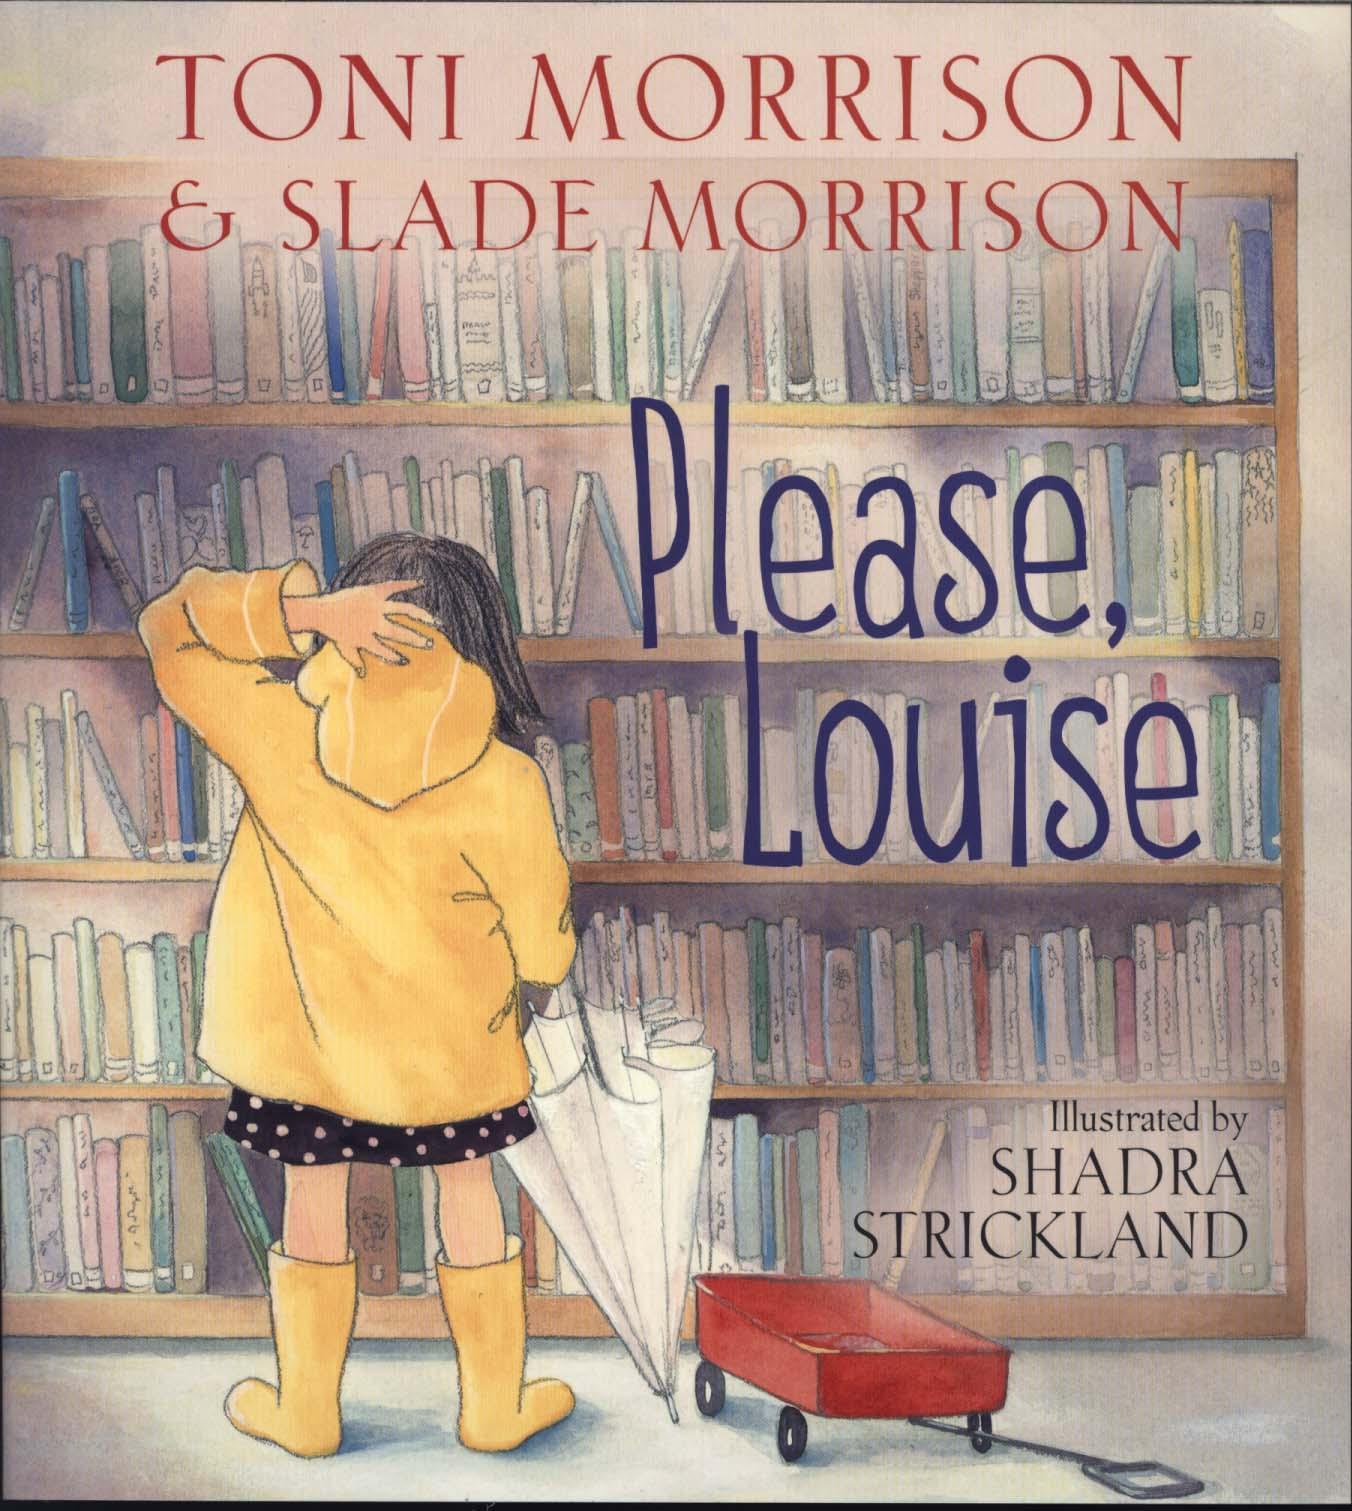 Please, Louise - Toni Morrison